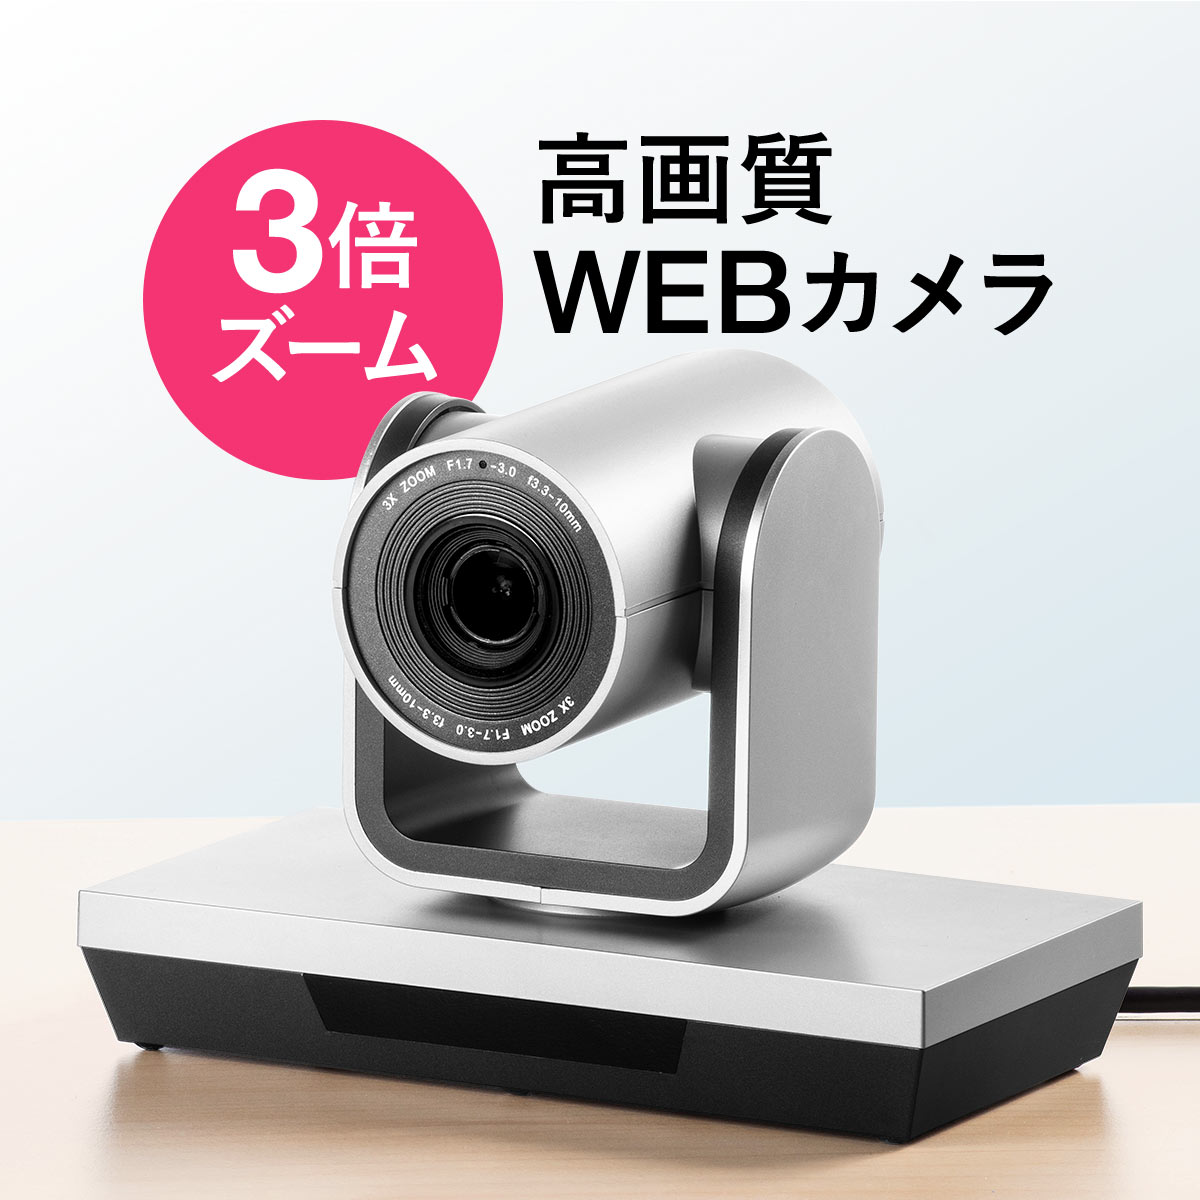 WEBカメラ 広角 高画質 会議用 USBカメラ 3倍ズーム対応 WEB会議向け パン・チルト対応 フルHD 210万画素 CMOSセンサー リモコン付き 接続するだけ 簡単 Zoom Teams